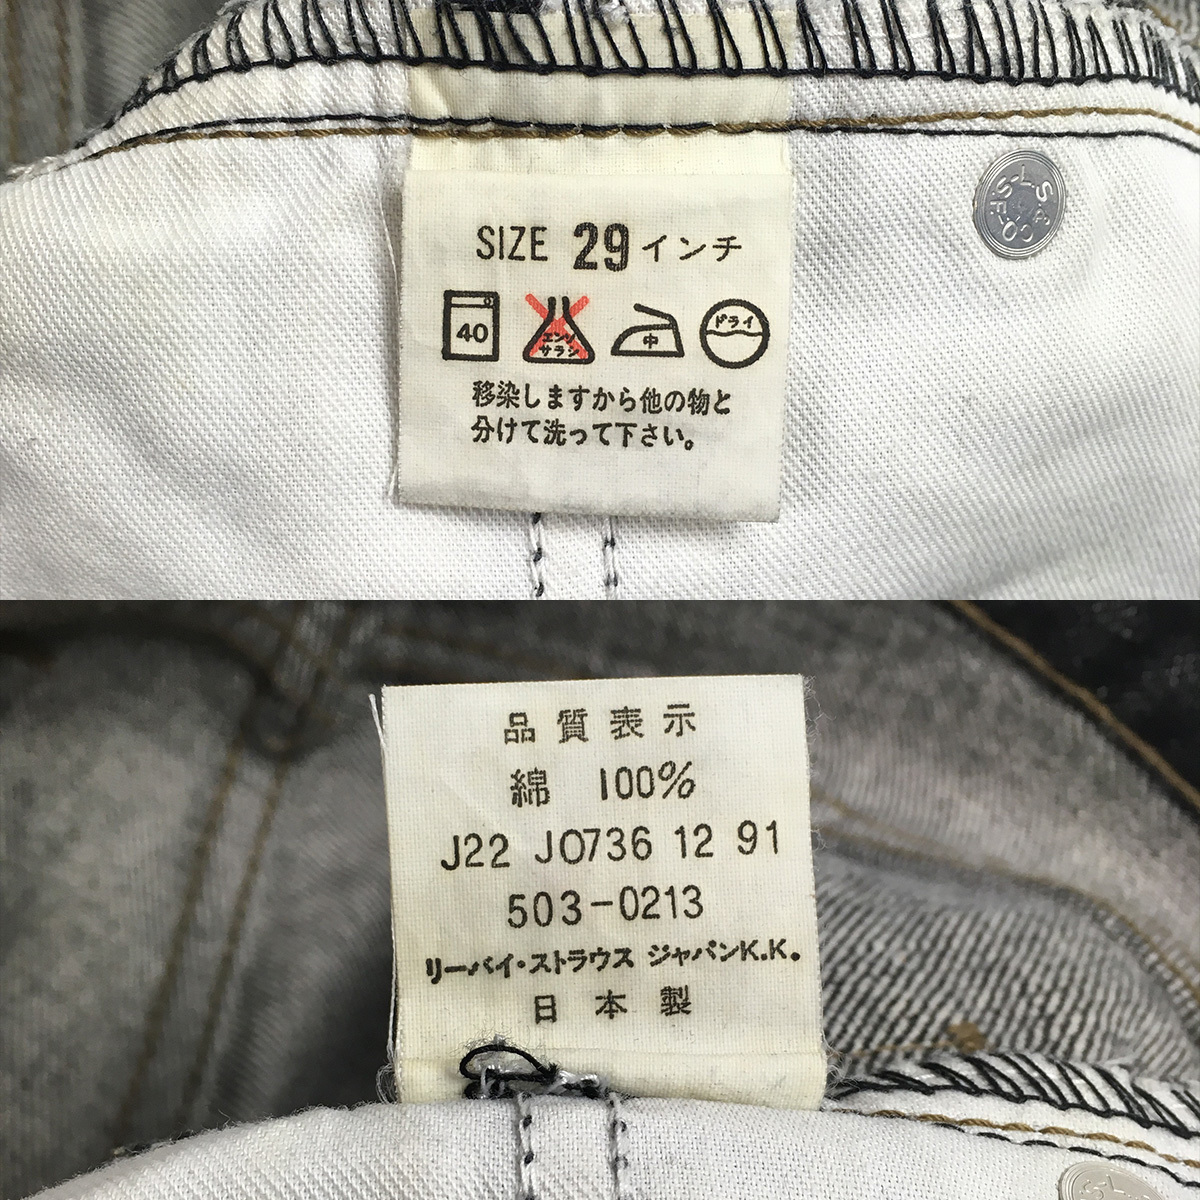 【90s】Levi's リーバイス 503-0259 503-0213 日本製 91年 ジーンズ W29 L33 ブラック デニム パンツ 紙パッチ  ジップフライ